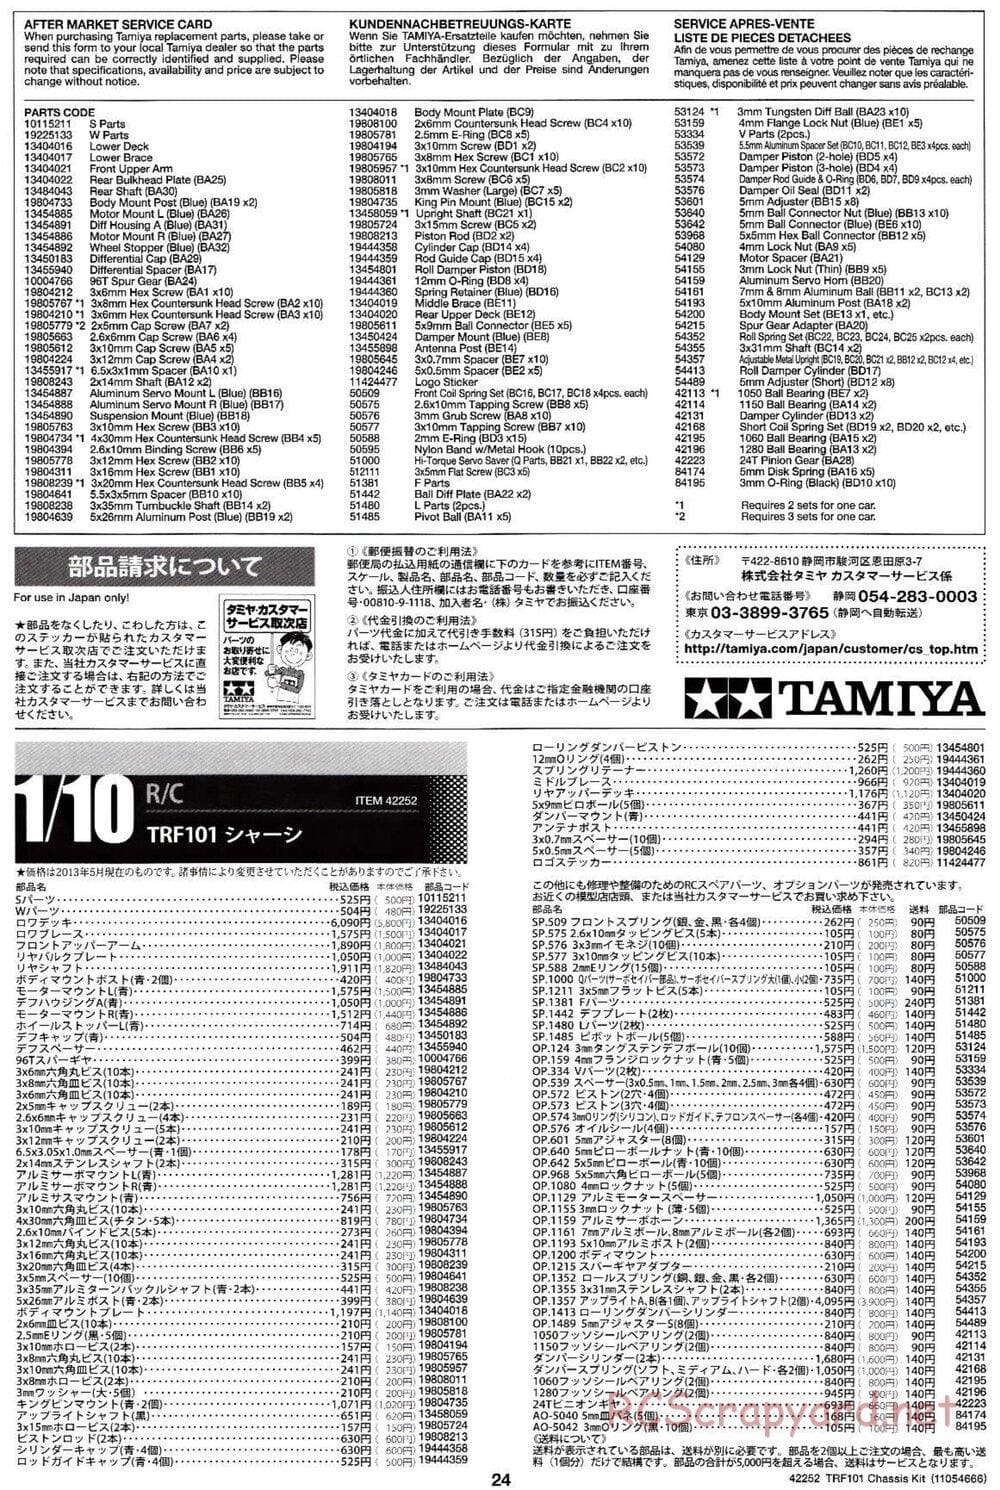 Tamiya - TRF101 Chassis - Manual - Page 24